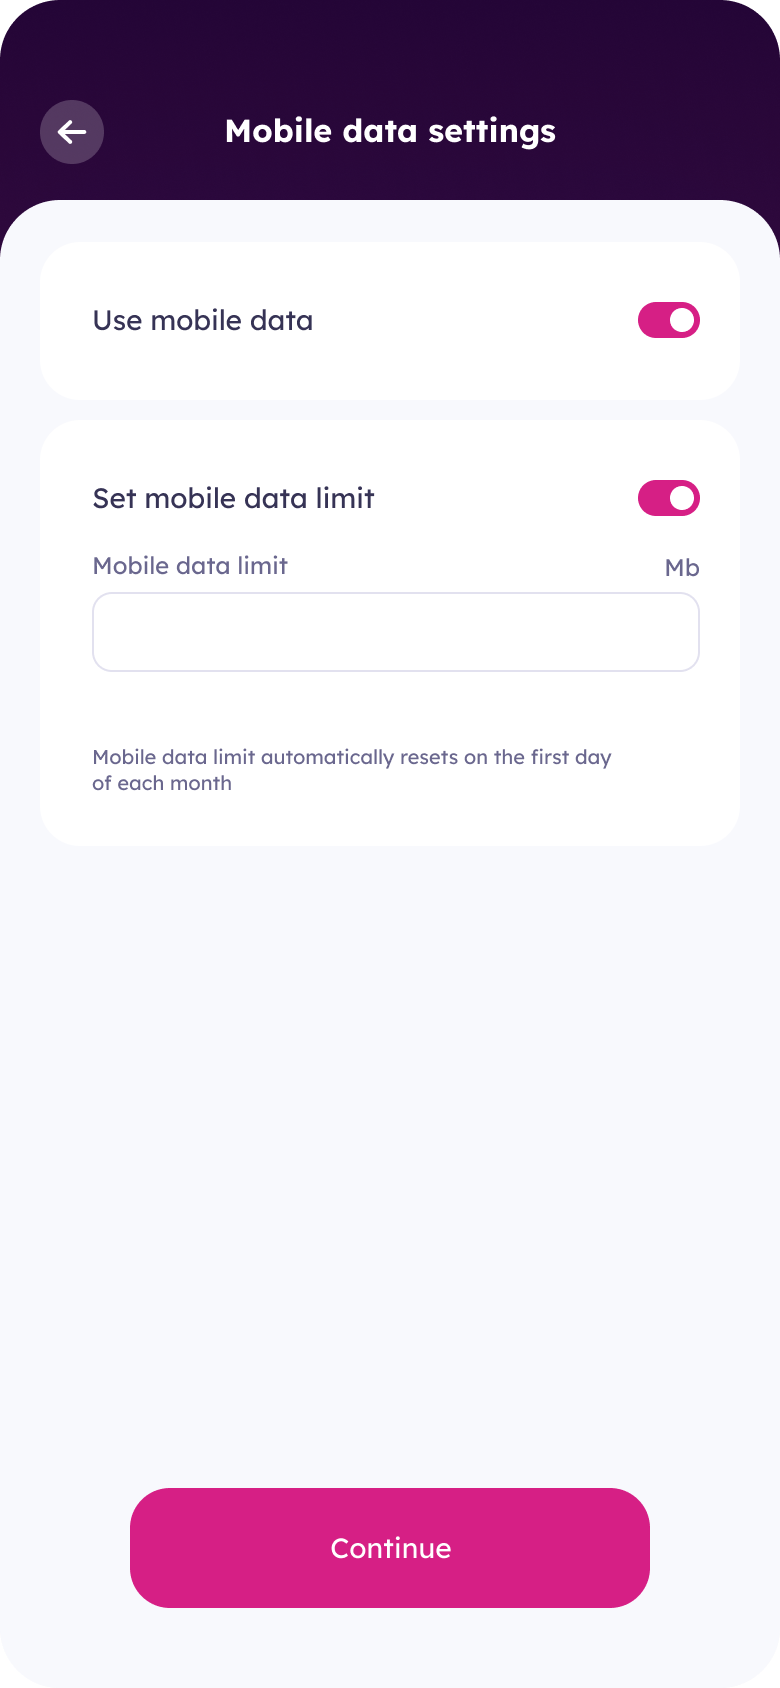 Mobile data setting screen